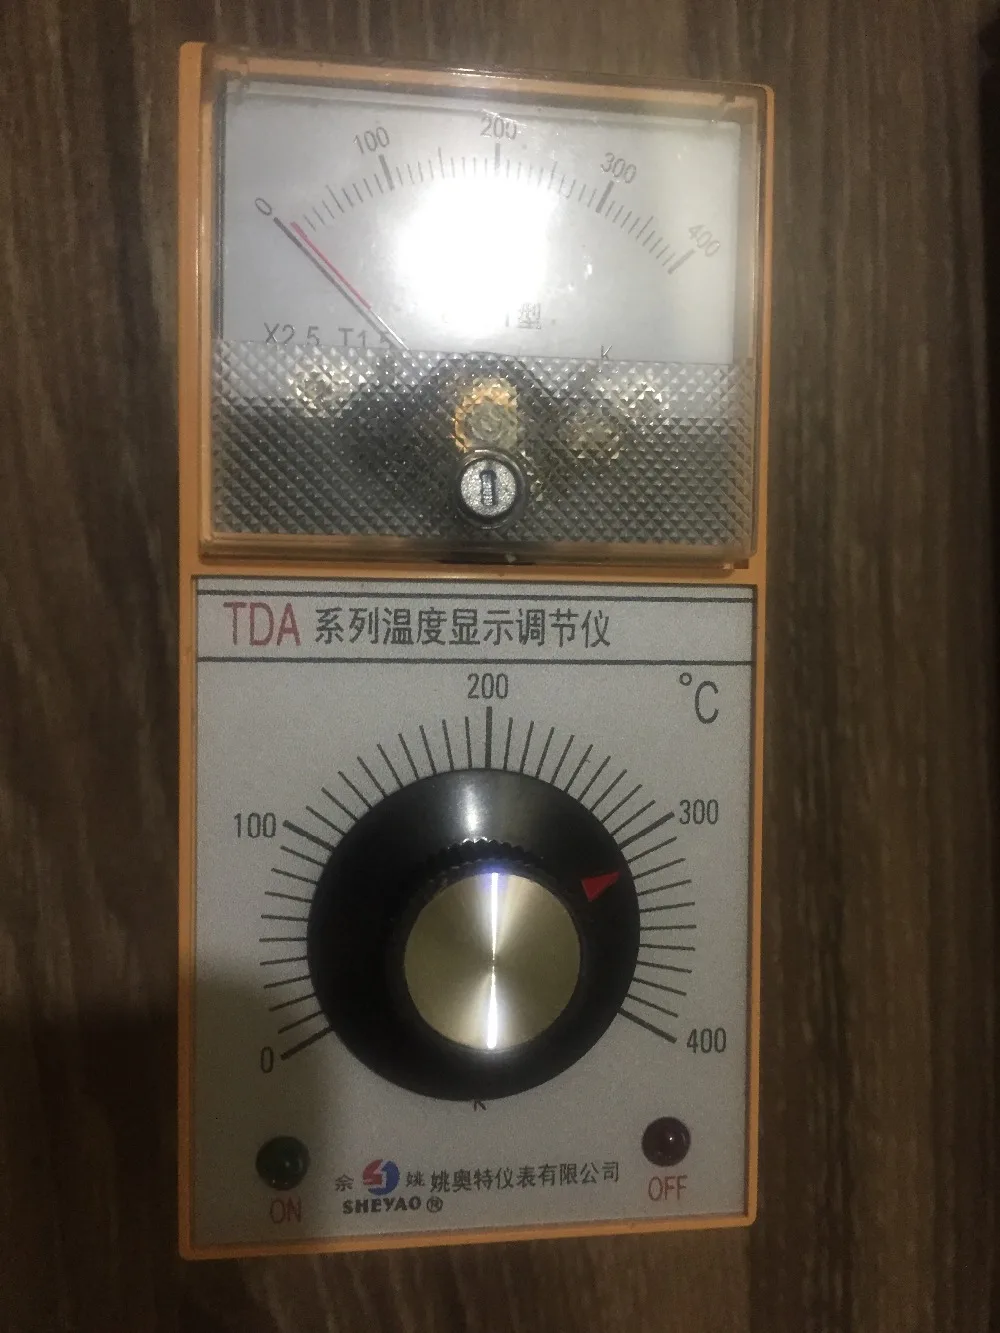 Aparat Yao Ott TDA termostat TDA-8001 pokazivač termostata TDA-8001 k 0-400